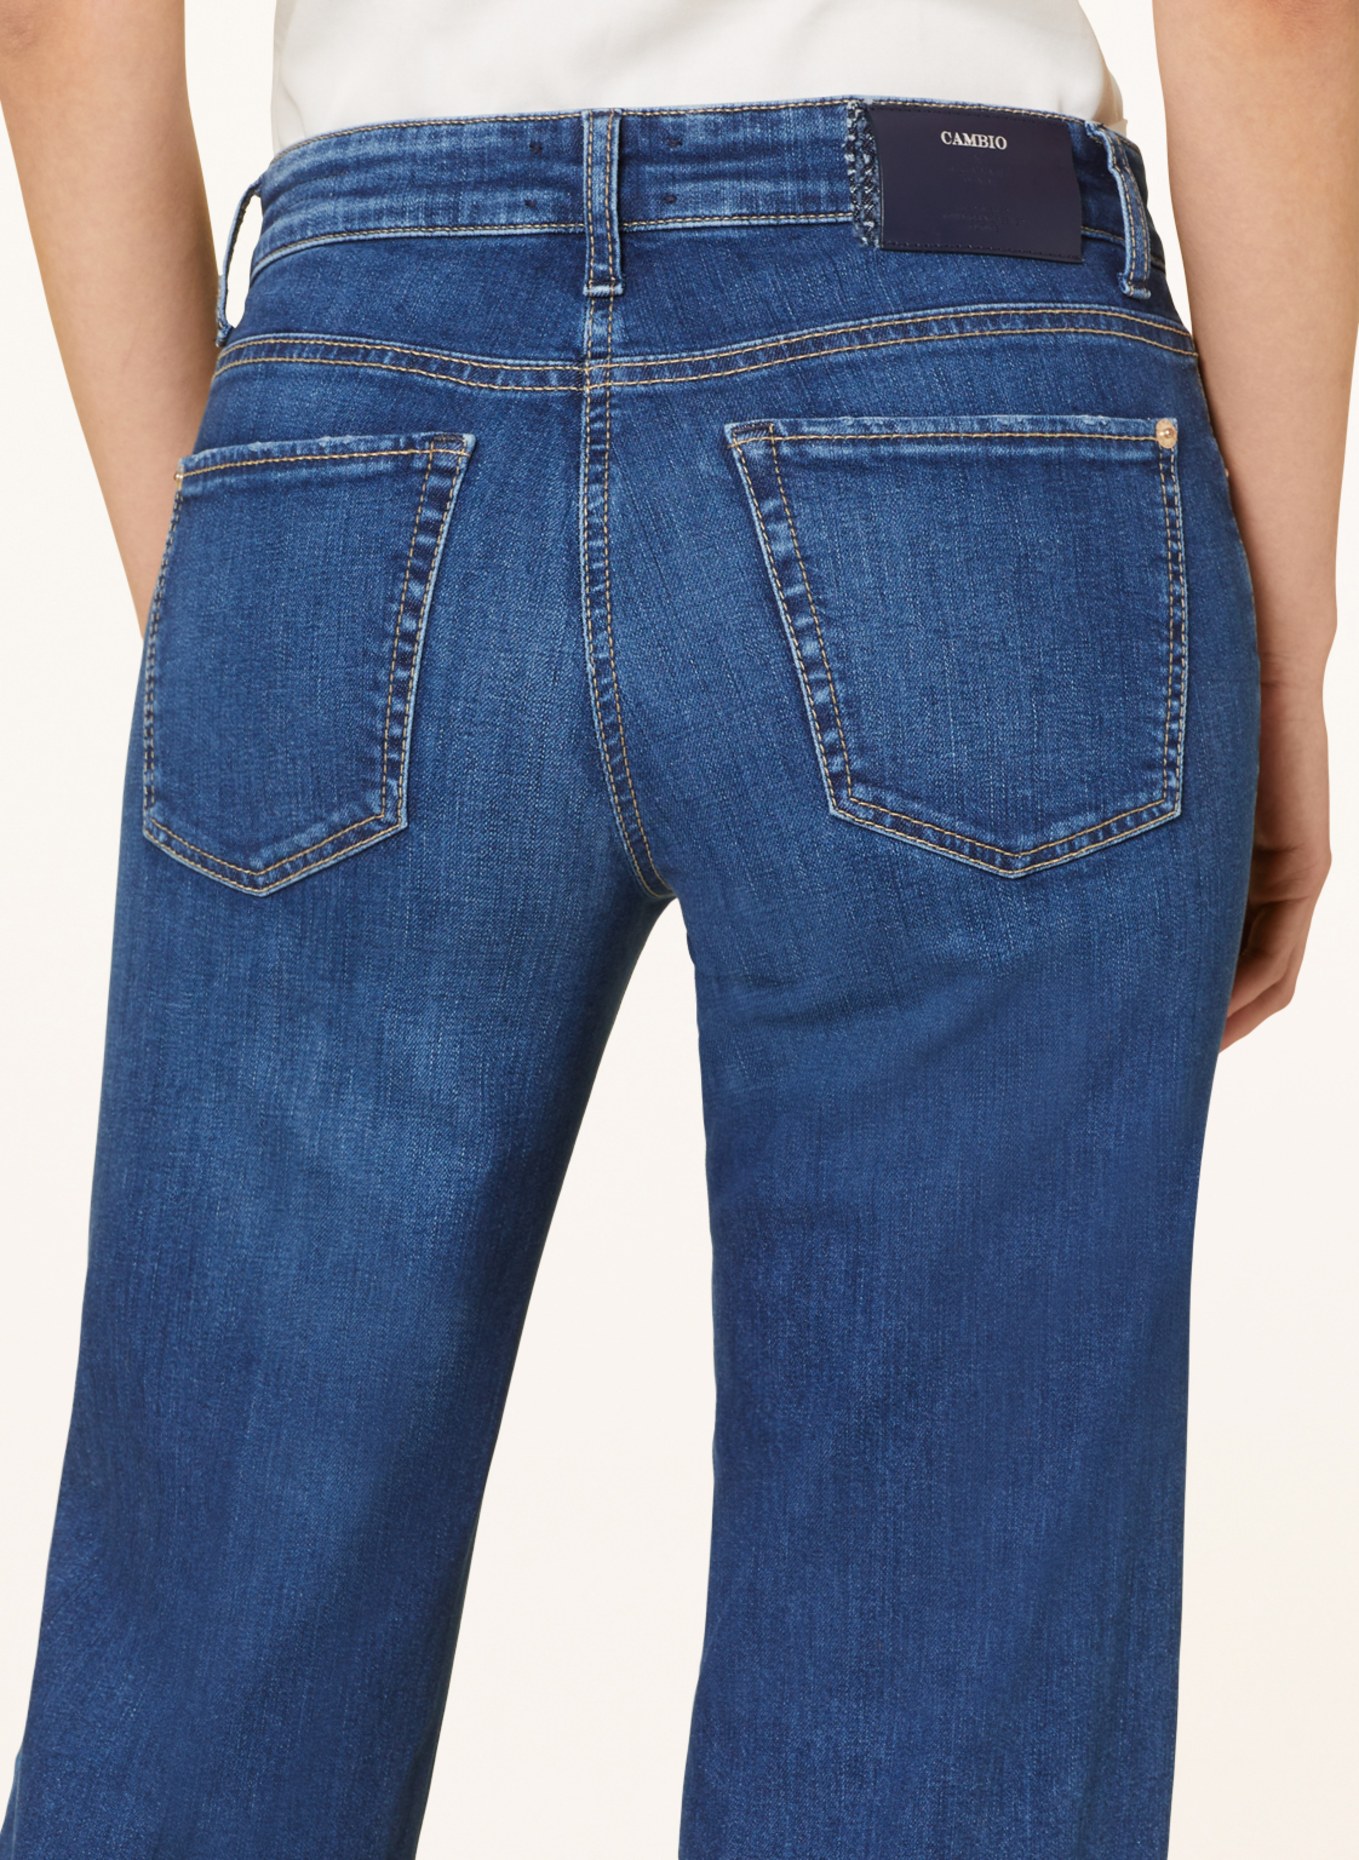 CAMBIO Jeans flared TESS, Kolor: 5187 eco used (Obrazek 6)